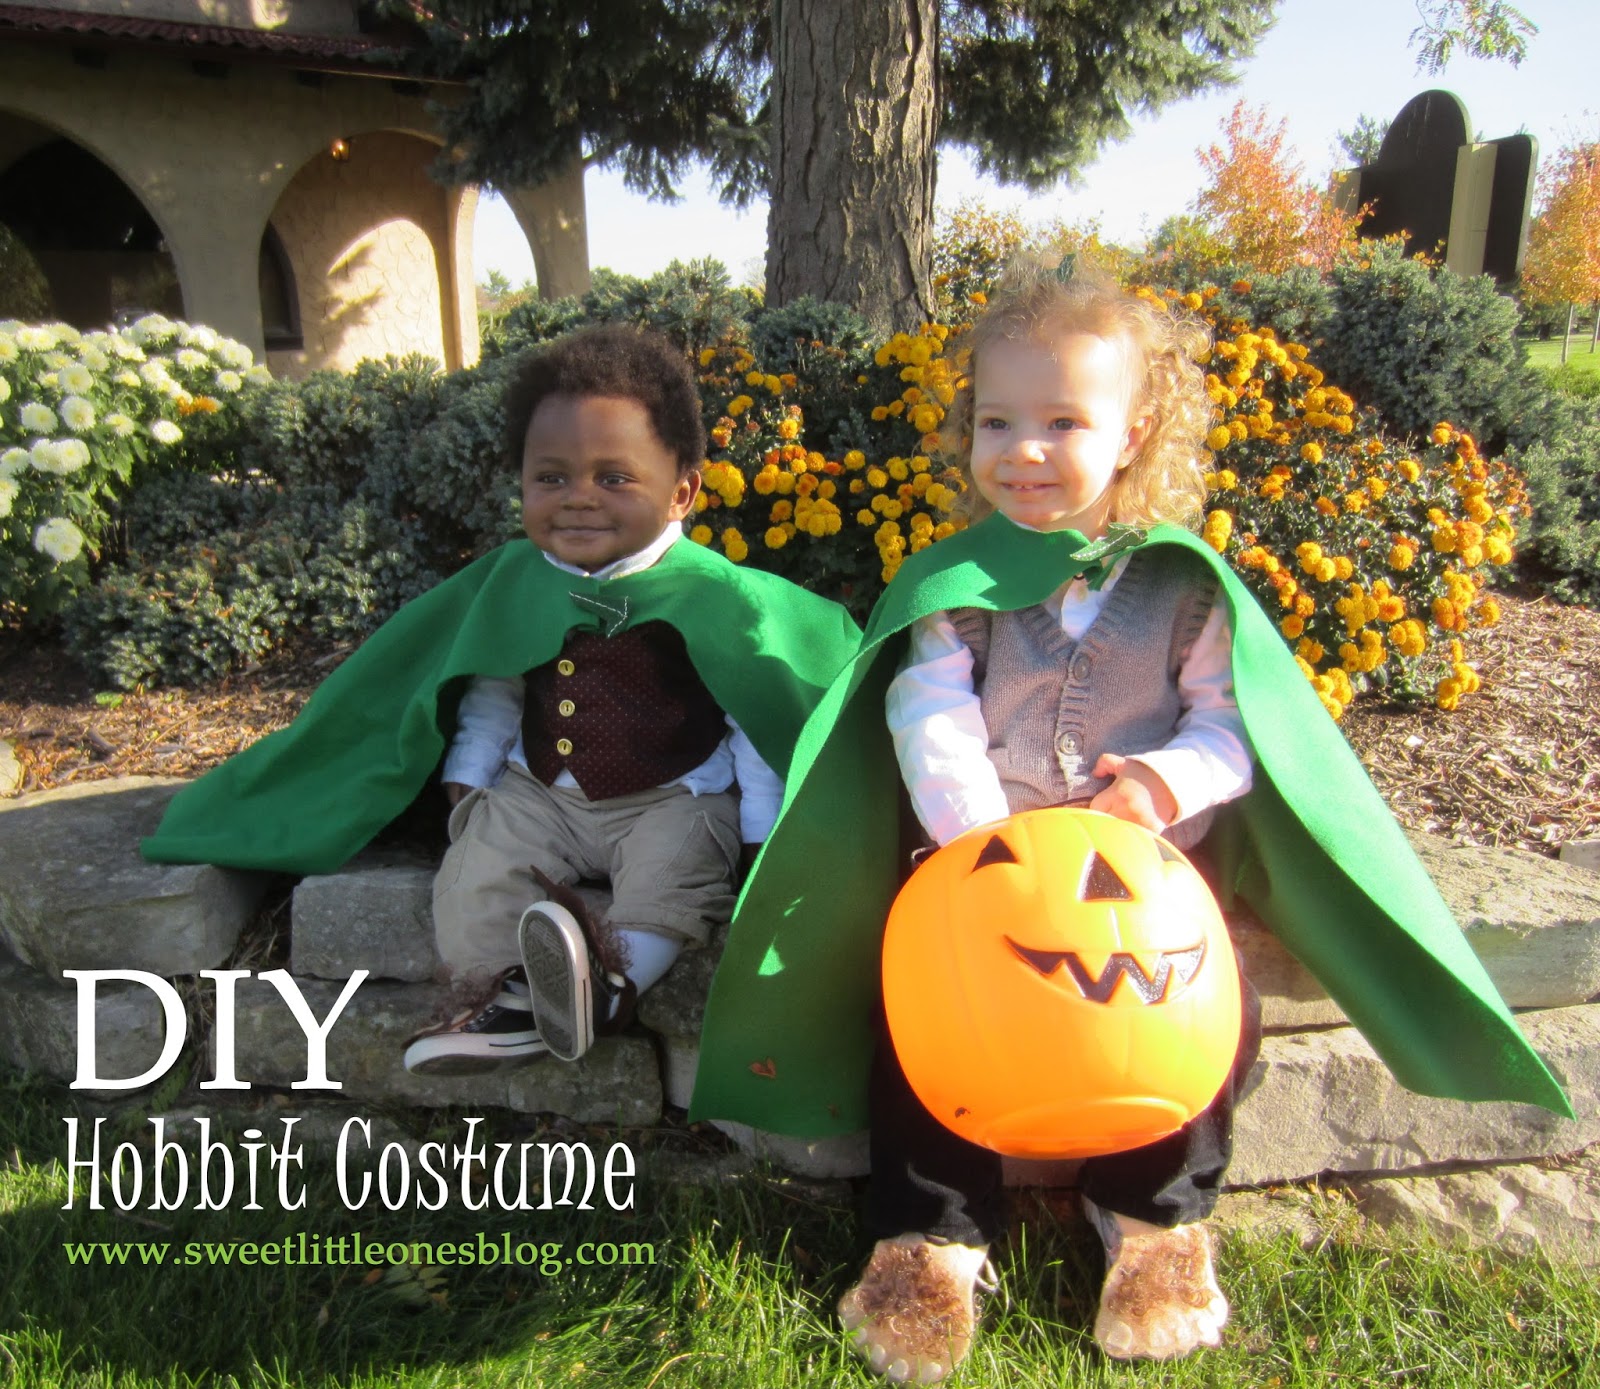 DIY Hobbit Halloween Costumes - www.sweetlittleonesblog.com